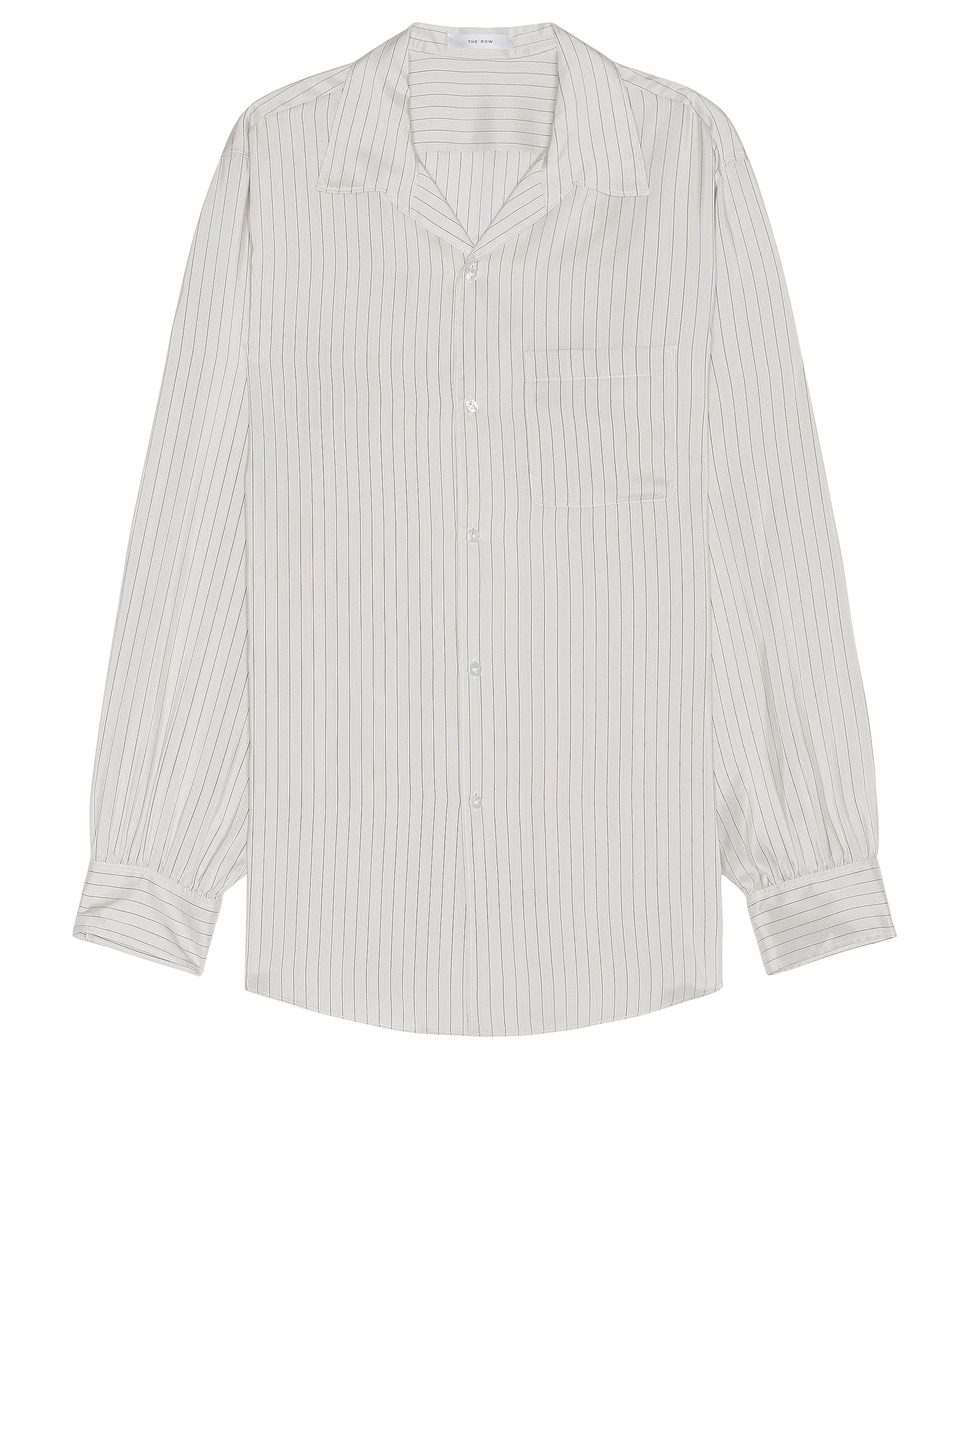 Image 1 of The Row Kiton Shirt in Grey Stripe